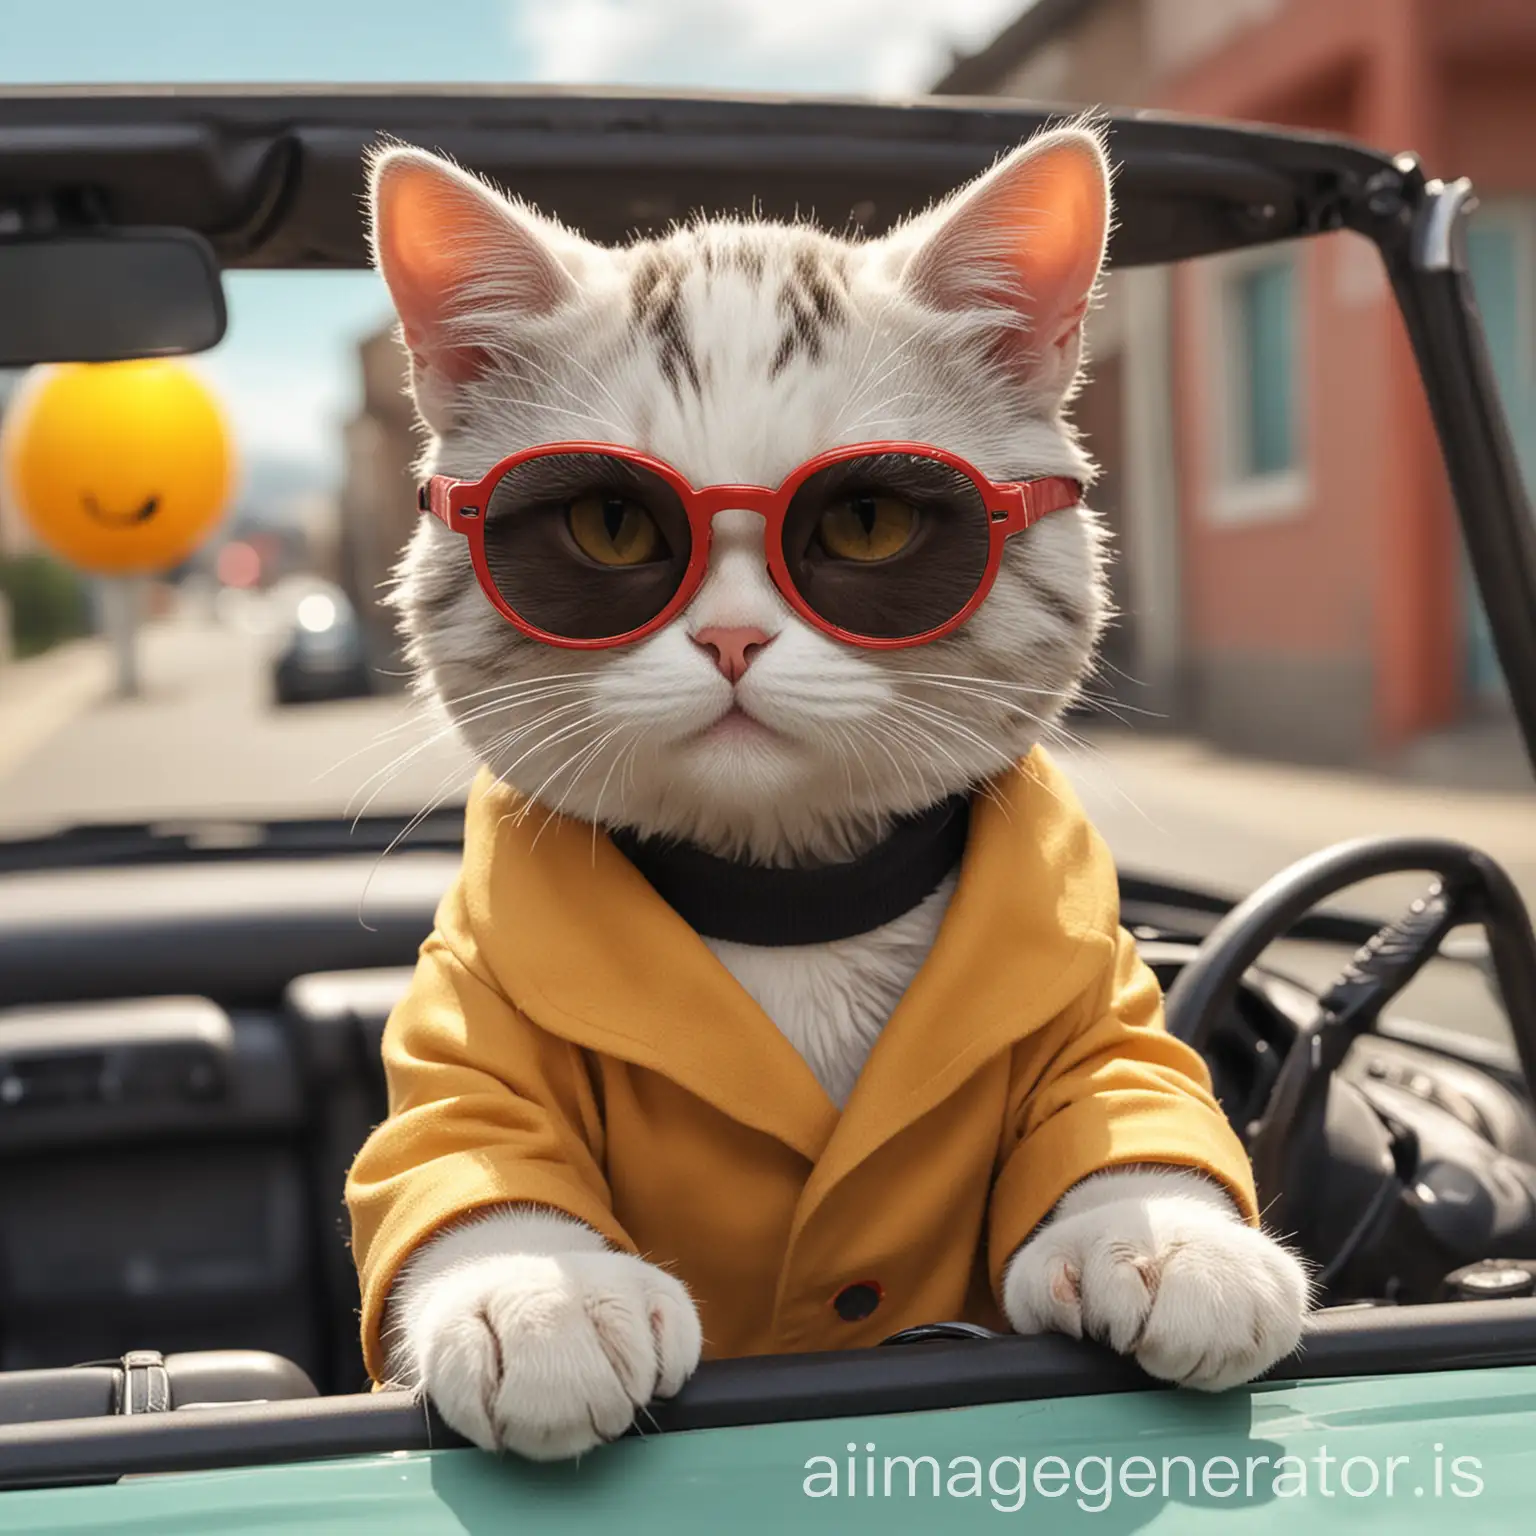 A CARTOON CAT WEARING A SUN GLASS, MASK AND COAT DRIVING A CAR